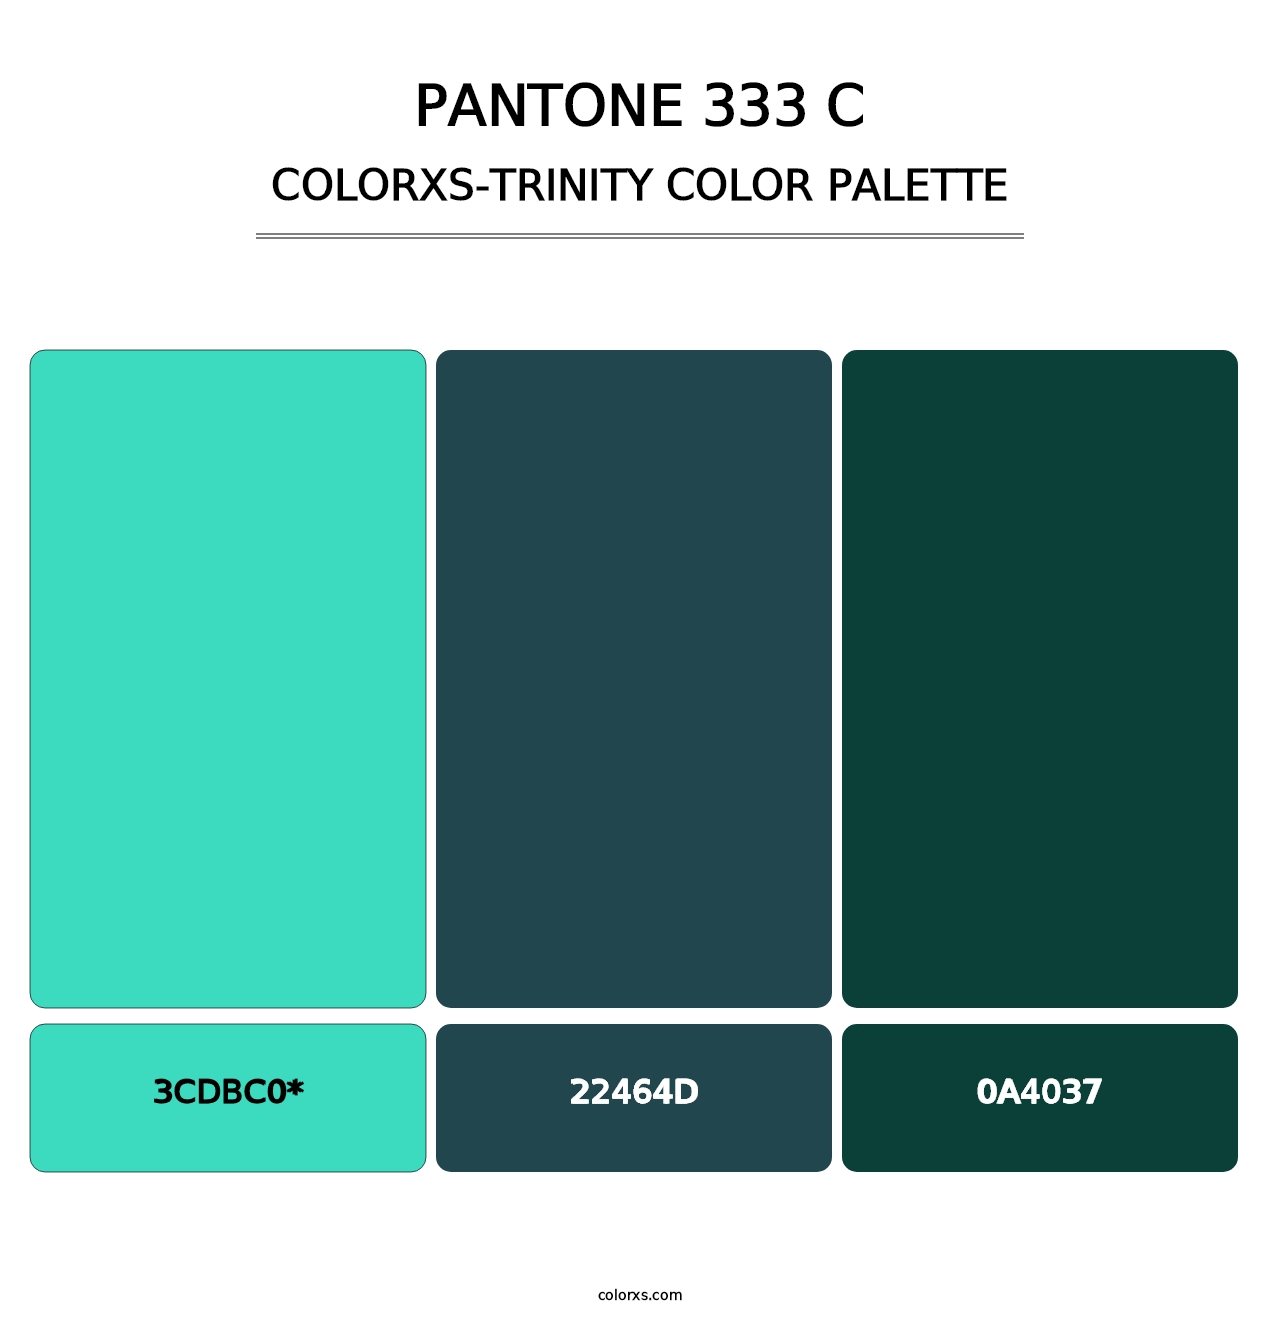 PANTONE 333 C - Colorxs Trinity Palette